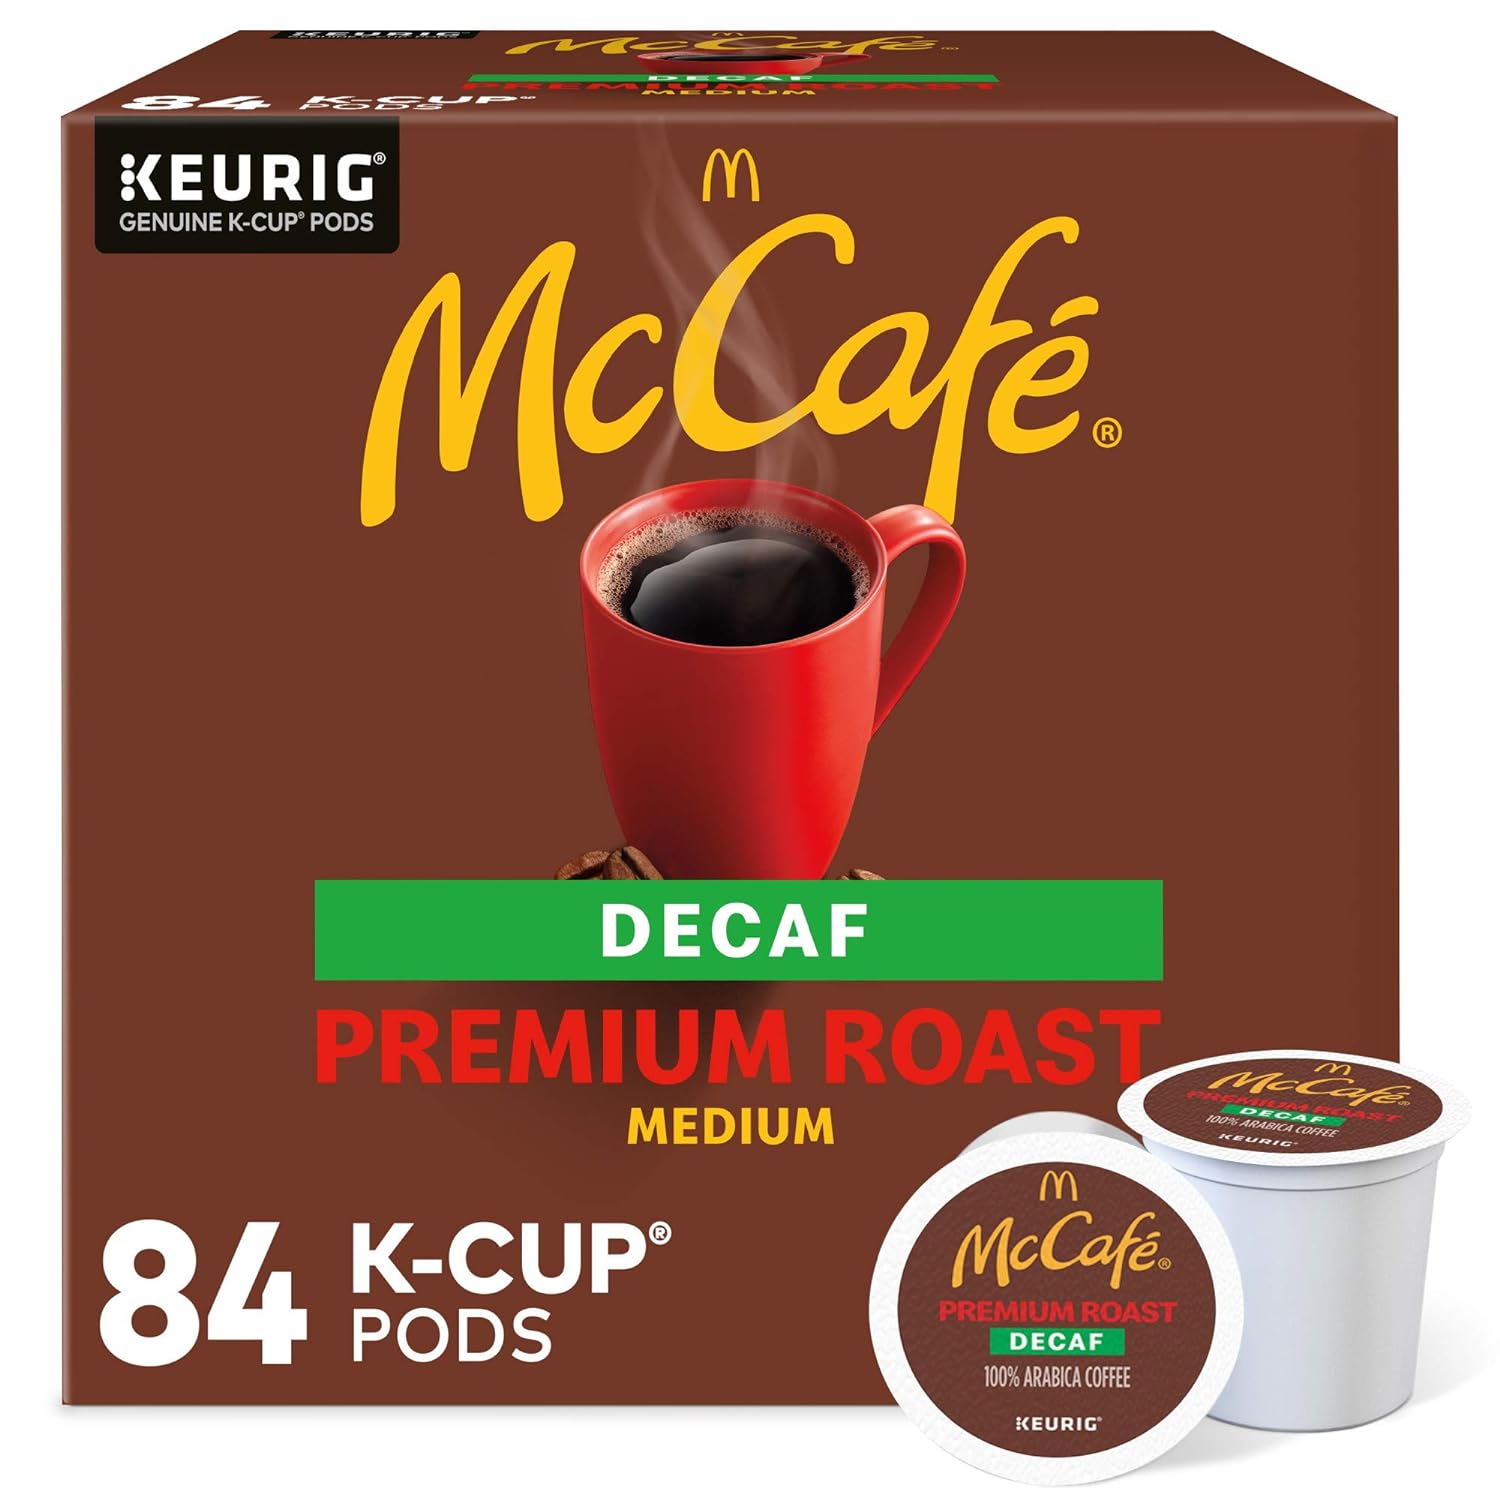 McCafe Decaf Premium Medium Roast K-Cup Coffee Pods 84 Count